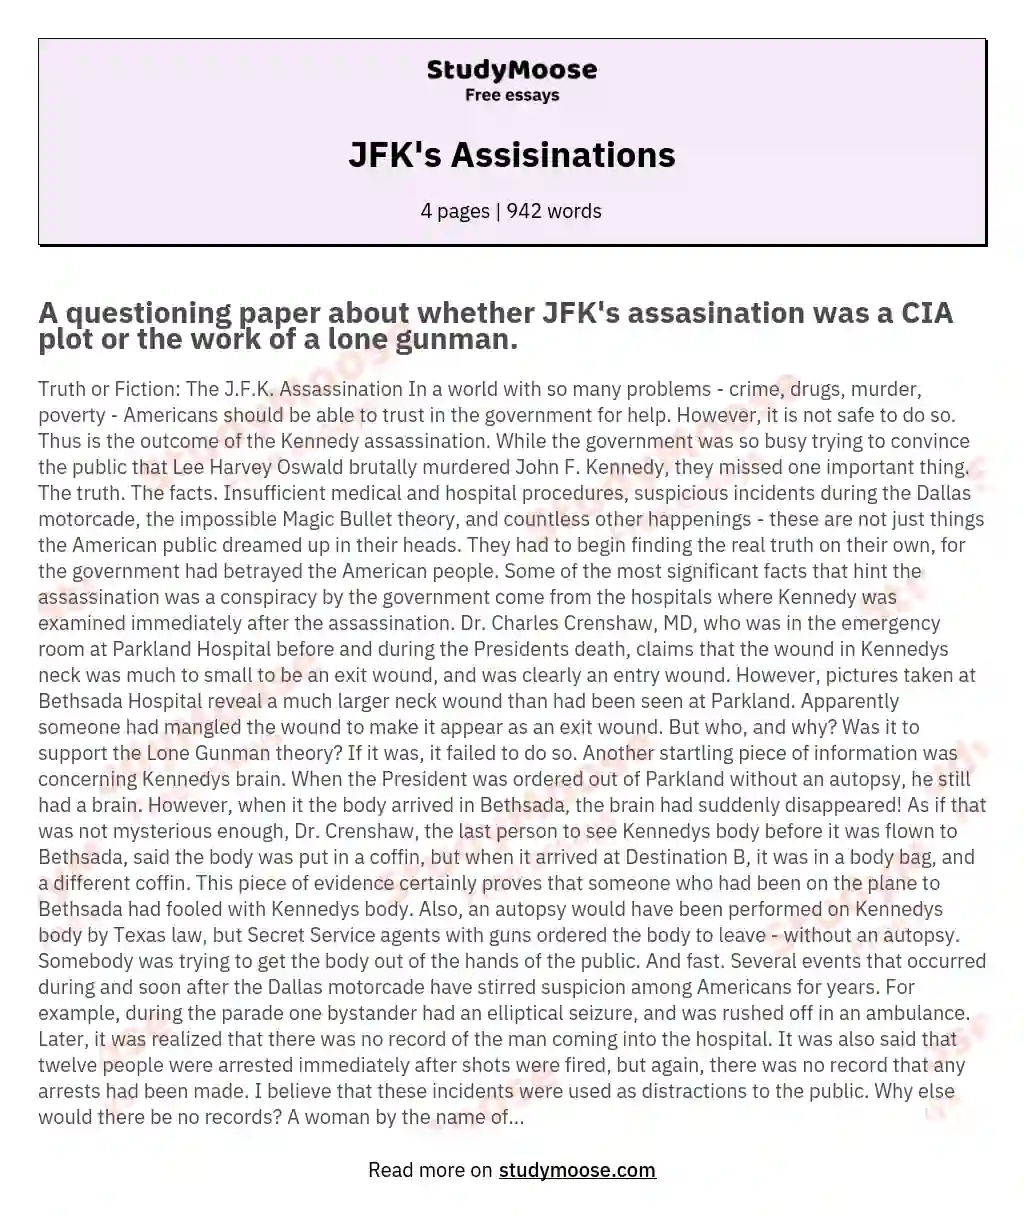 JFK's Assisinations essay